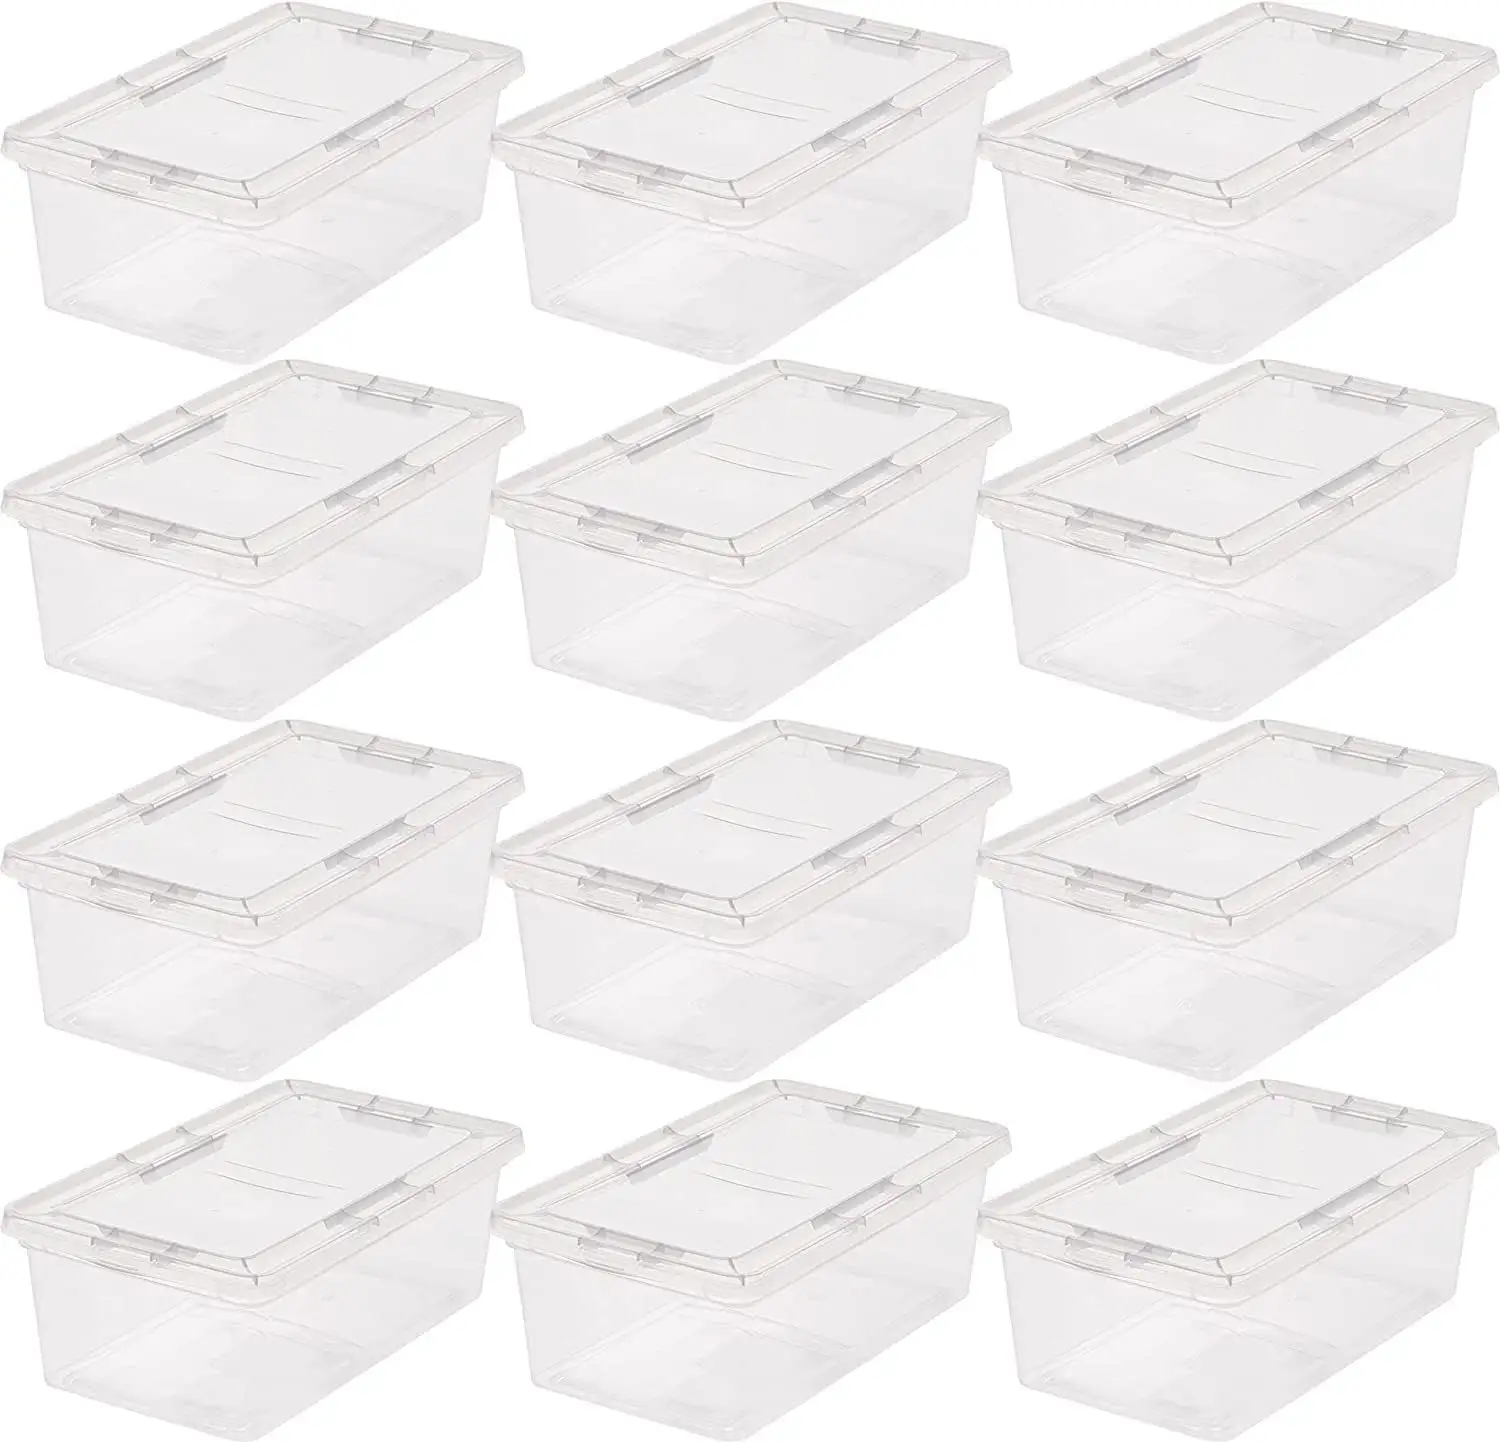 Plastic storage box with locking cover, 20 bags can be nested, handbag, wardrobe, game organization, shoe box